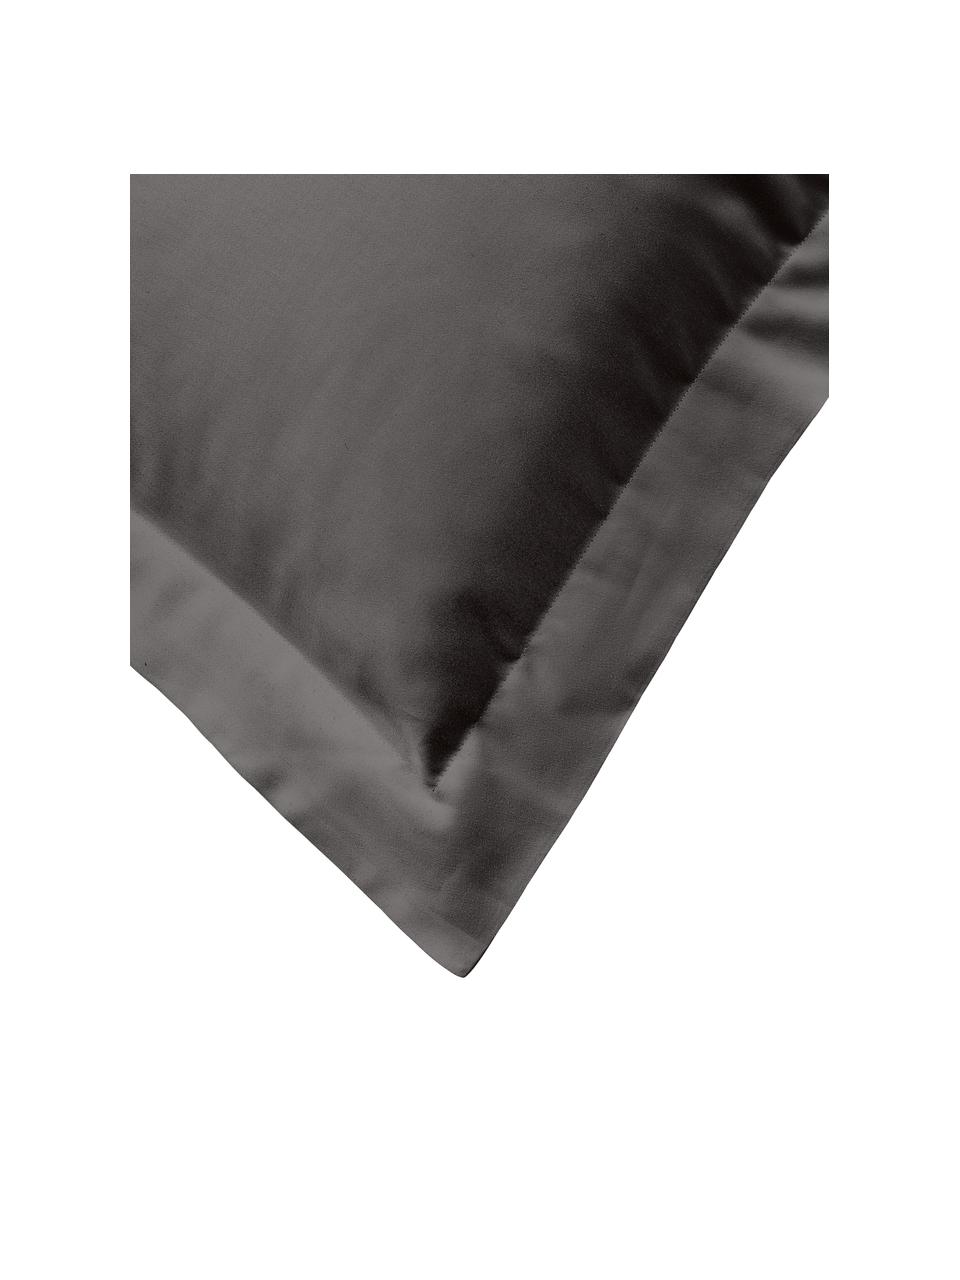 Satin-Kopfkissenbezug Premium aus Baumwolle in Grau, Webart: Satin Fadendichte 400 TC,, Grau, B 40 x L 80 cm